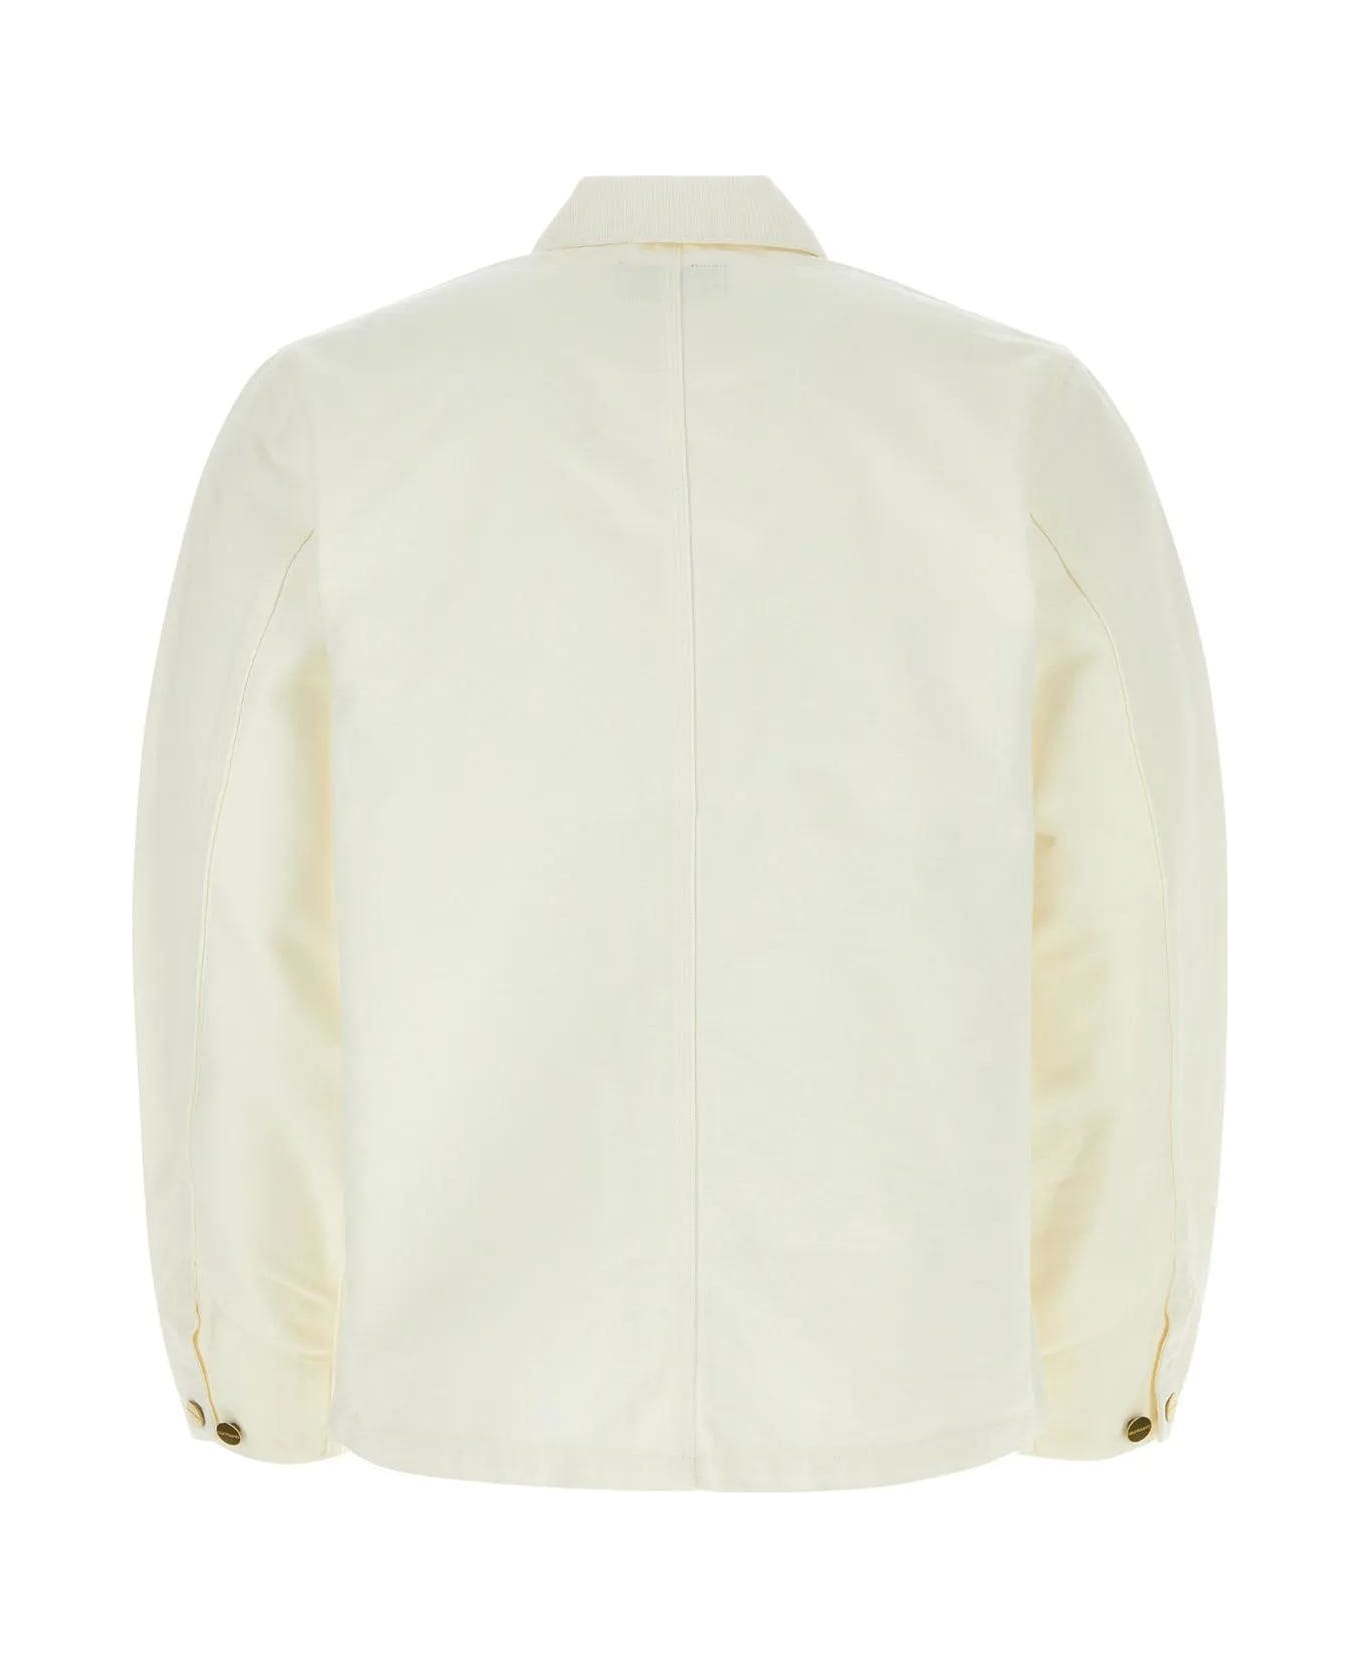 Carhartt WIP White Cotton Detroit Jacket - White ジャケット